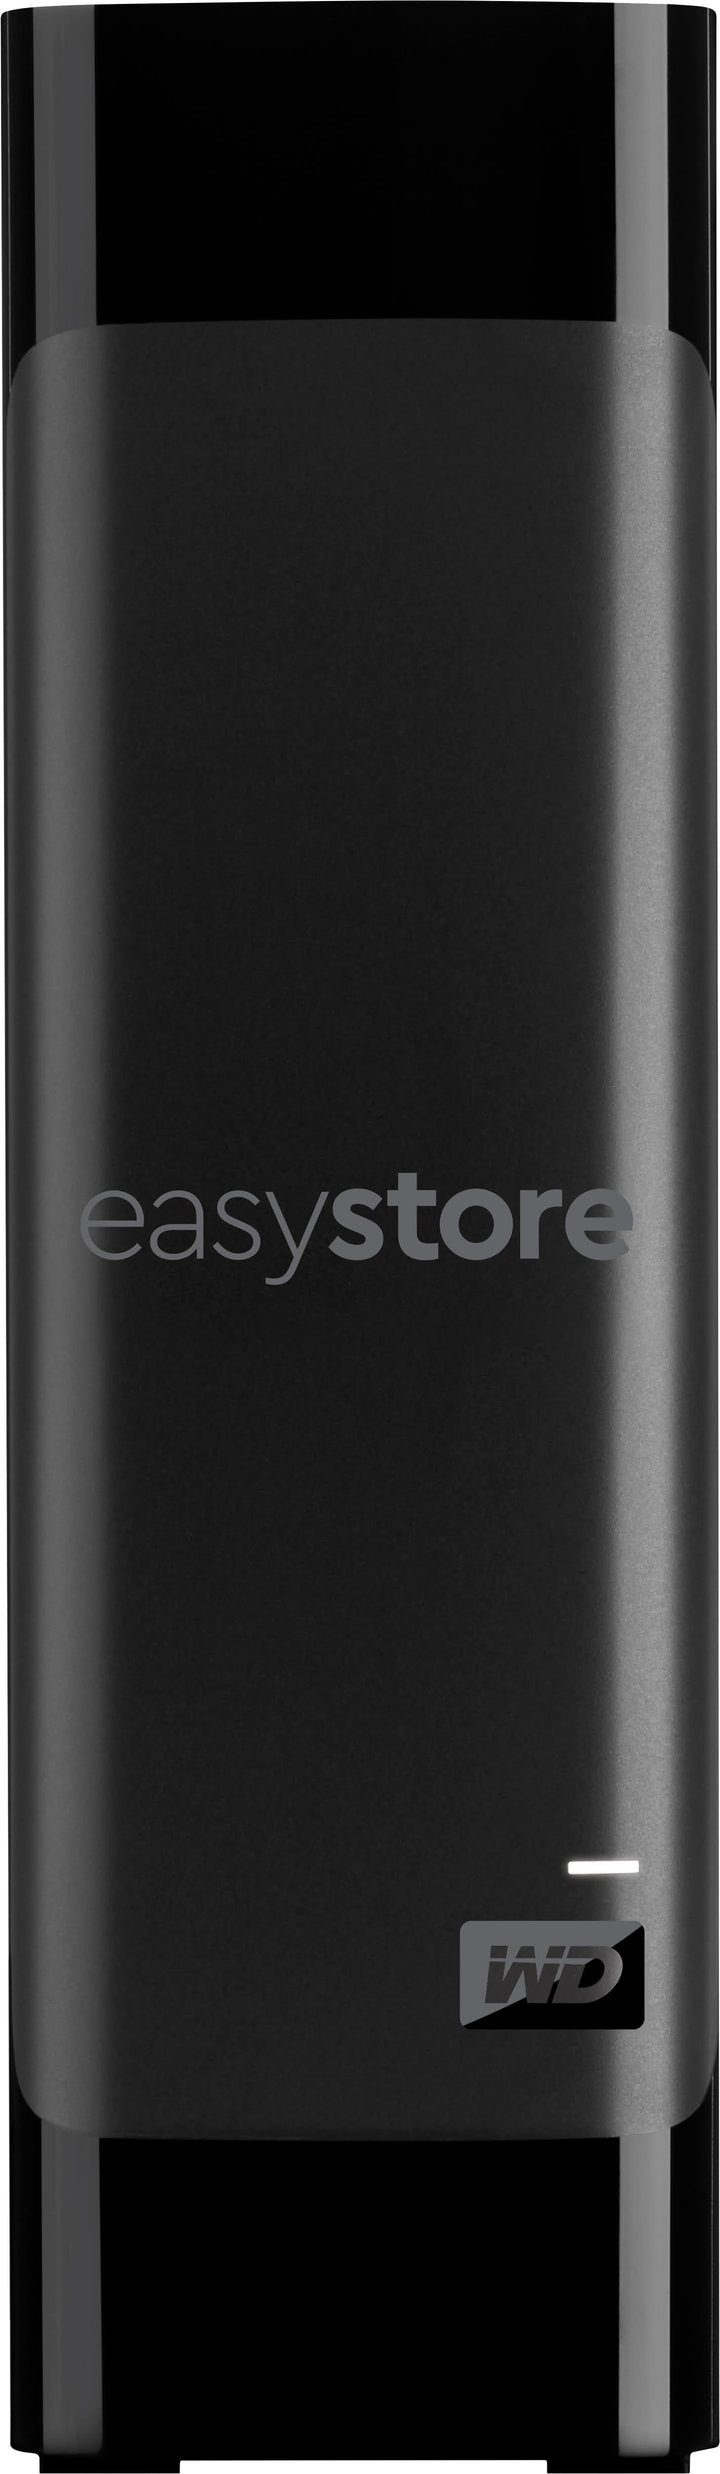 WD - easystore 20TB External USB 3.0 Hard Drive - Black_0